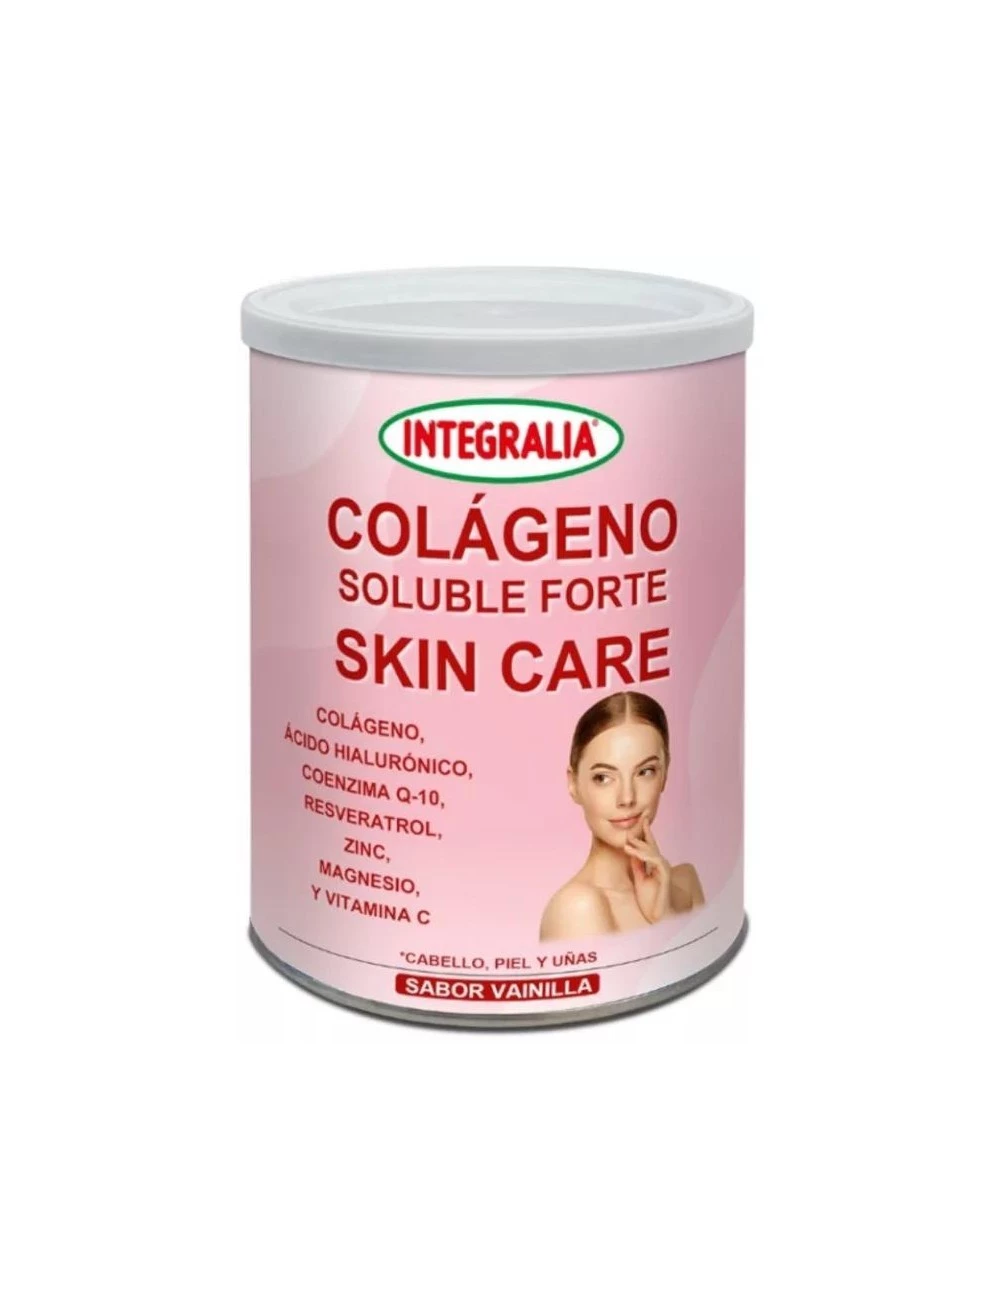 Integralia Colágeno soluble forte Skin Care, 360g.